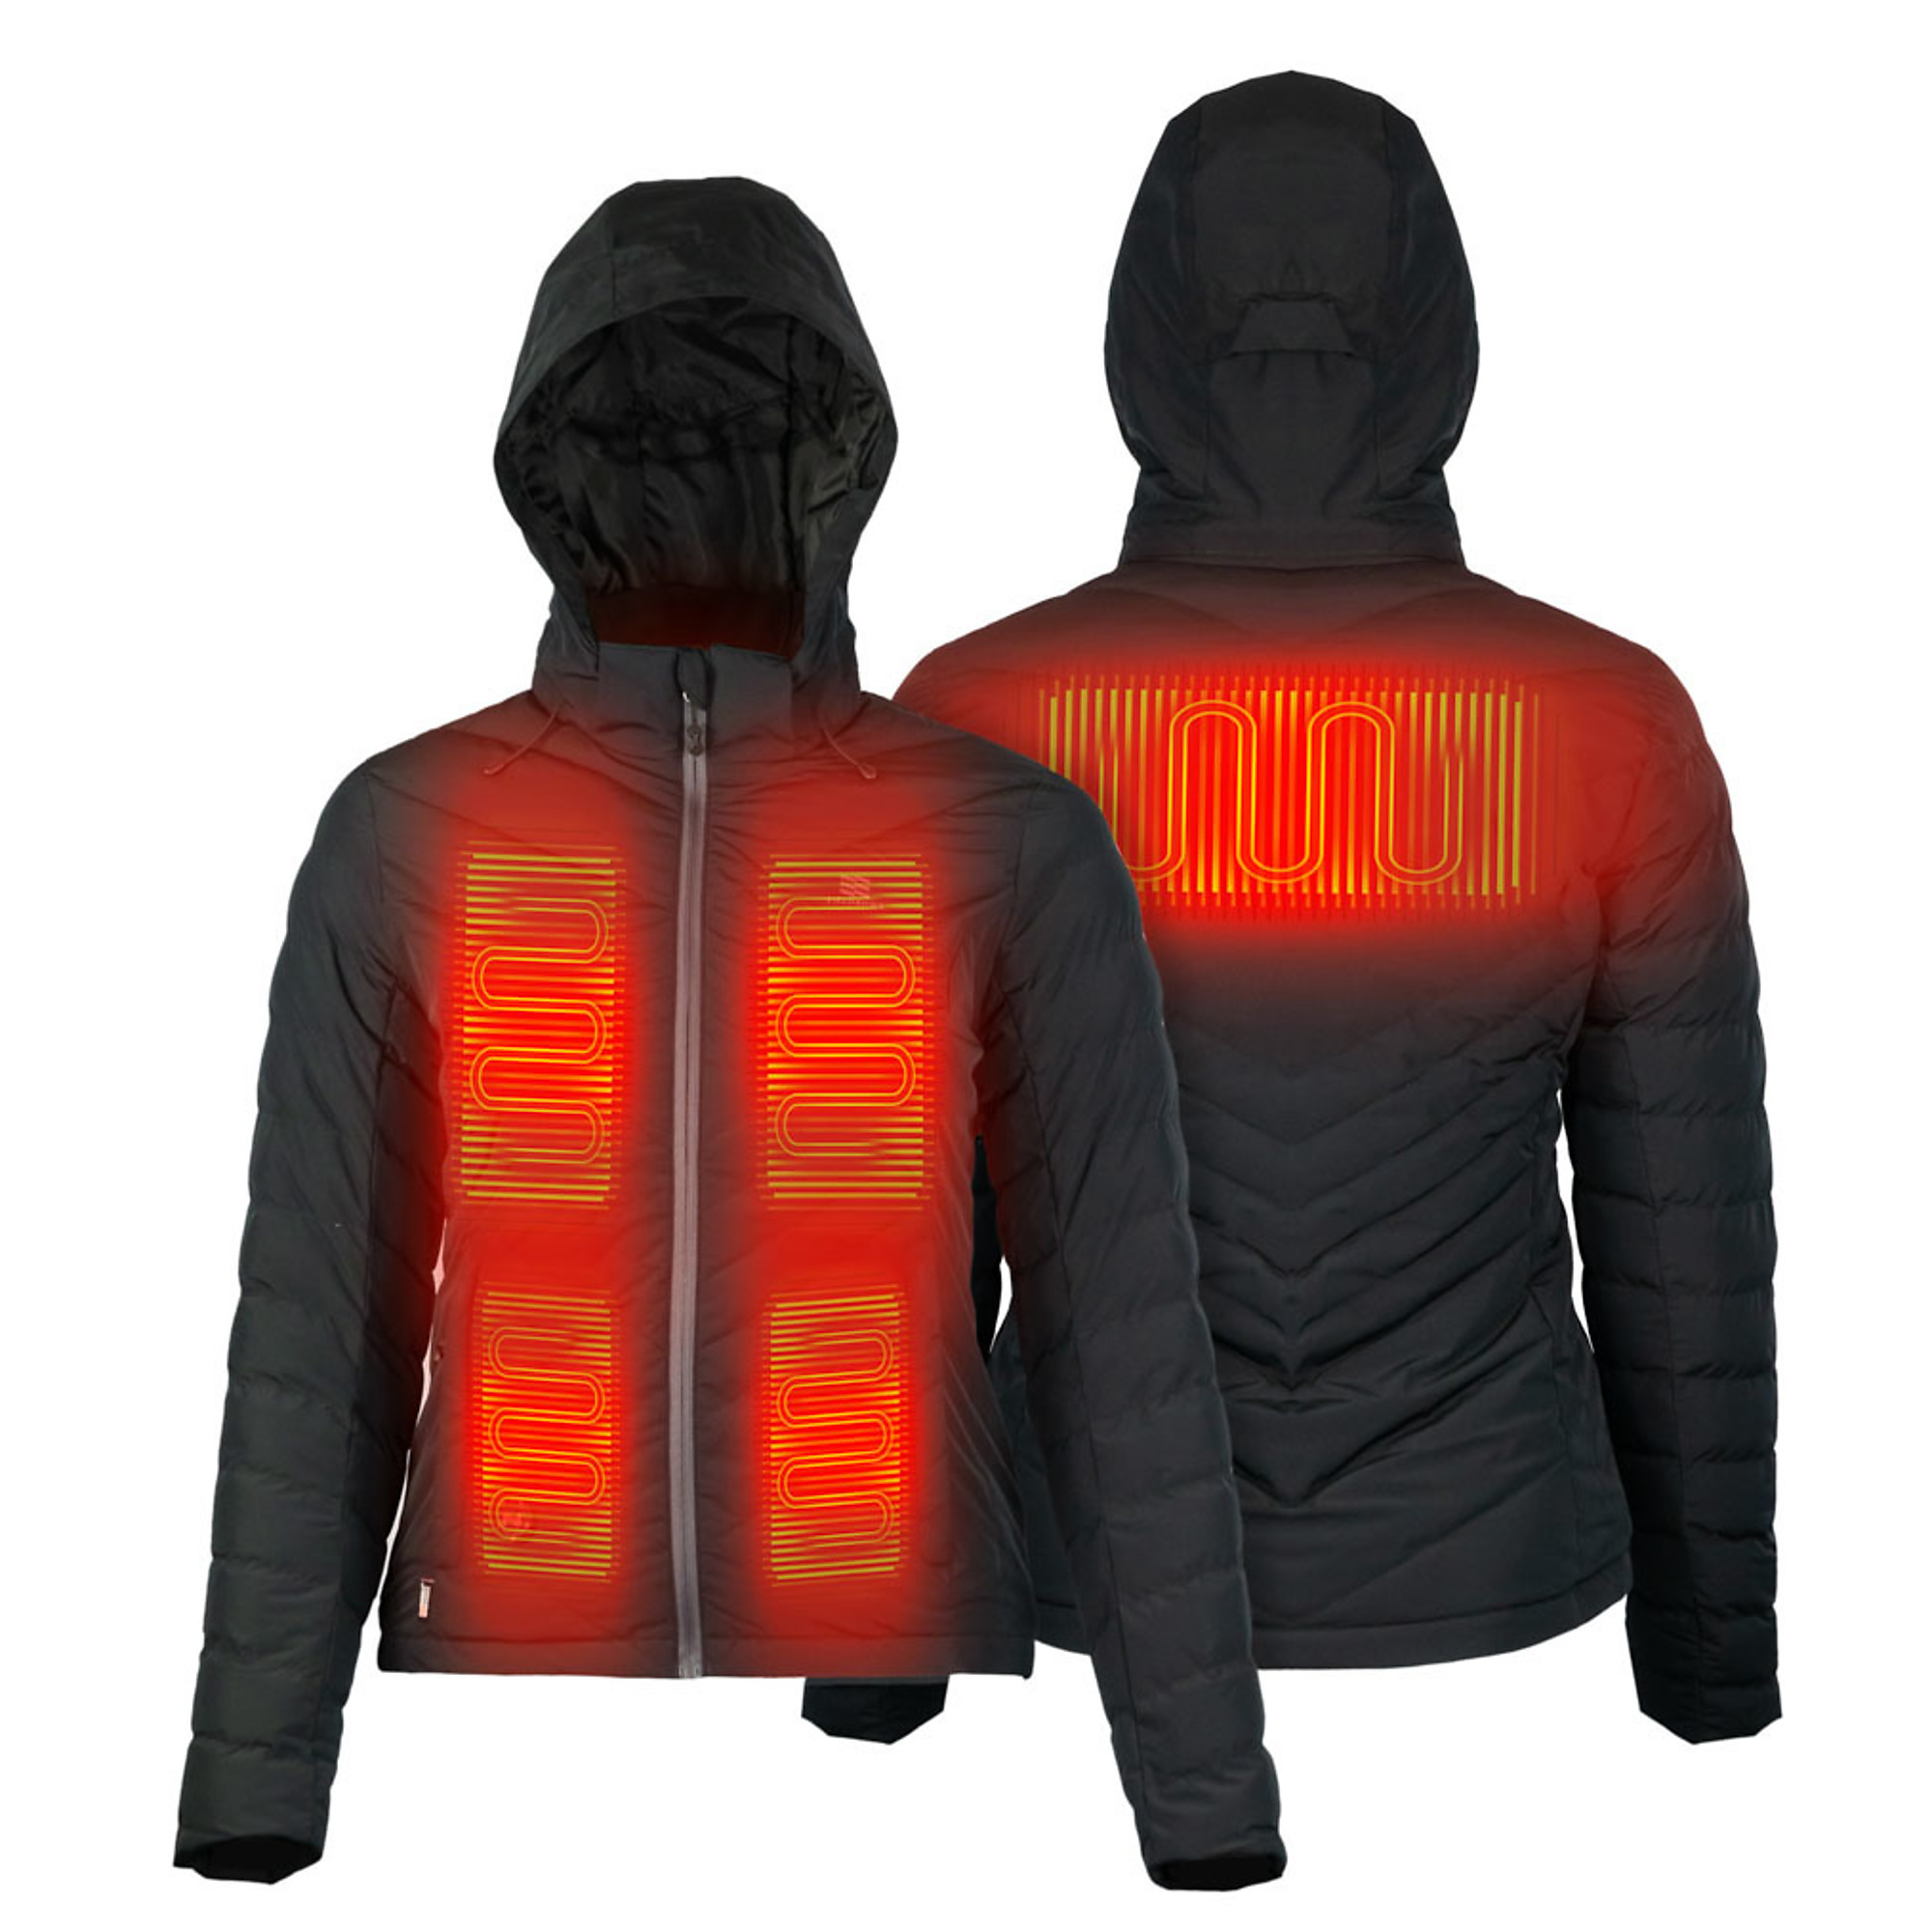 Fieldsheer, Women's Crest Heated Jacket with 7.4v Battery, Size M, Color Black, Model MWWJ39010322